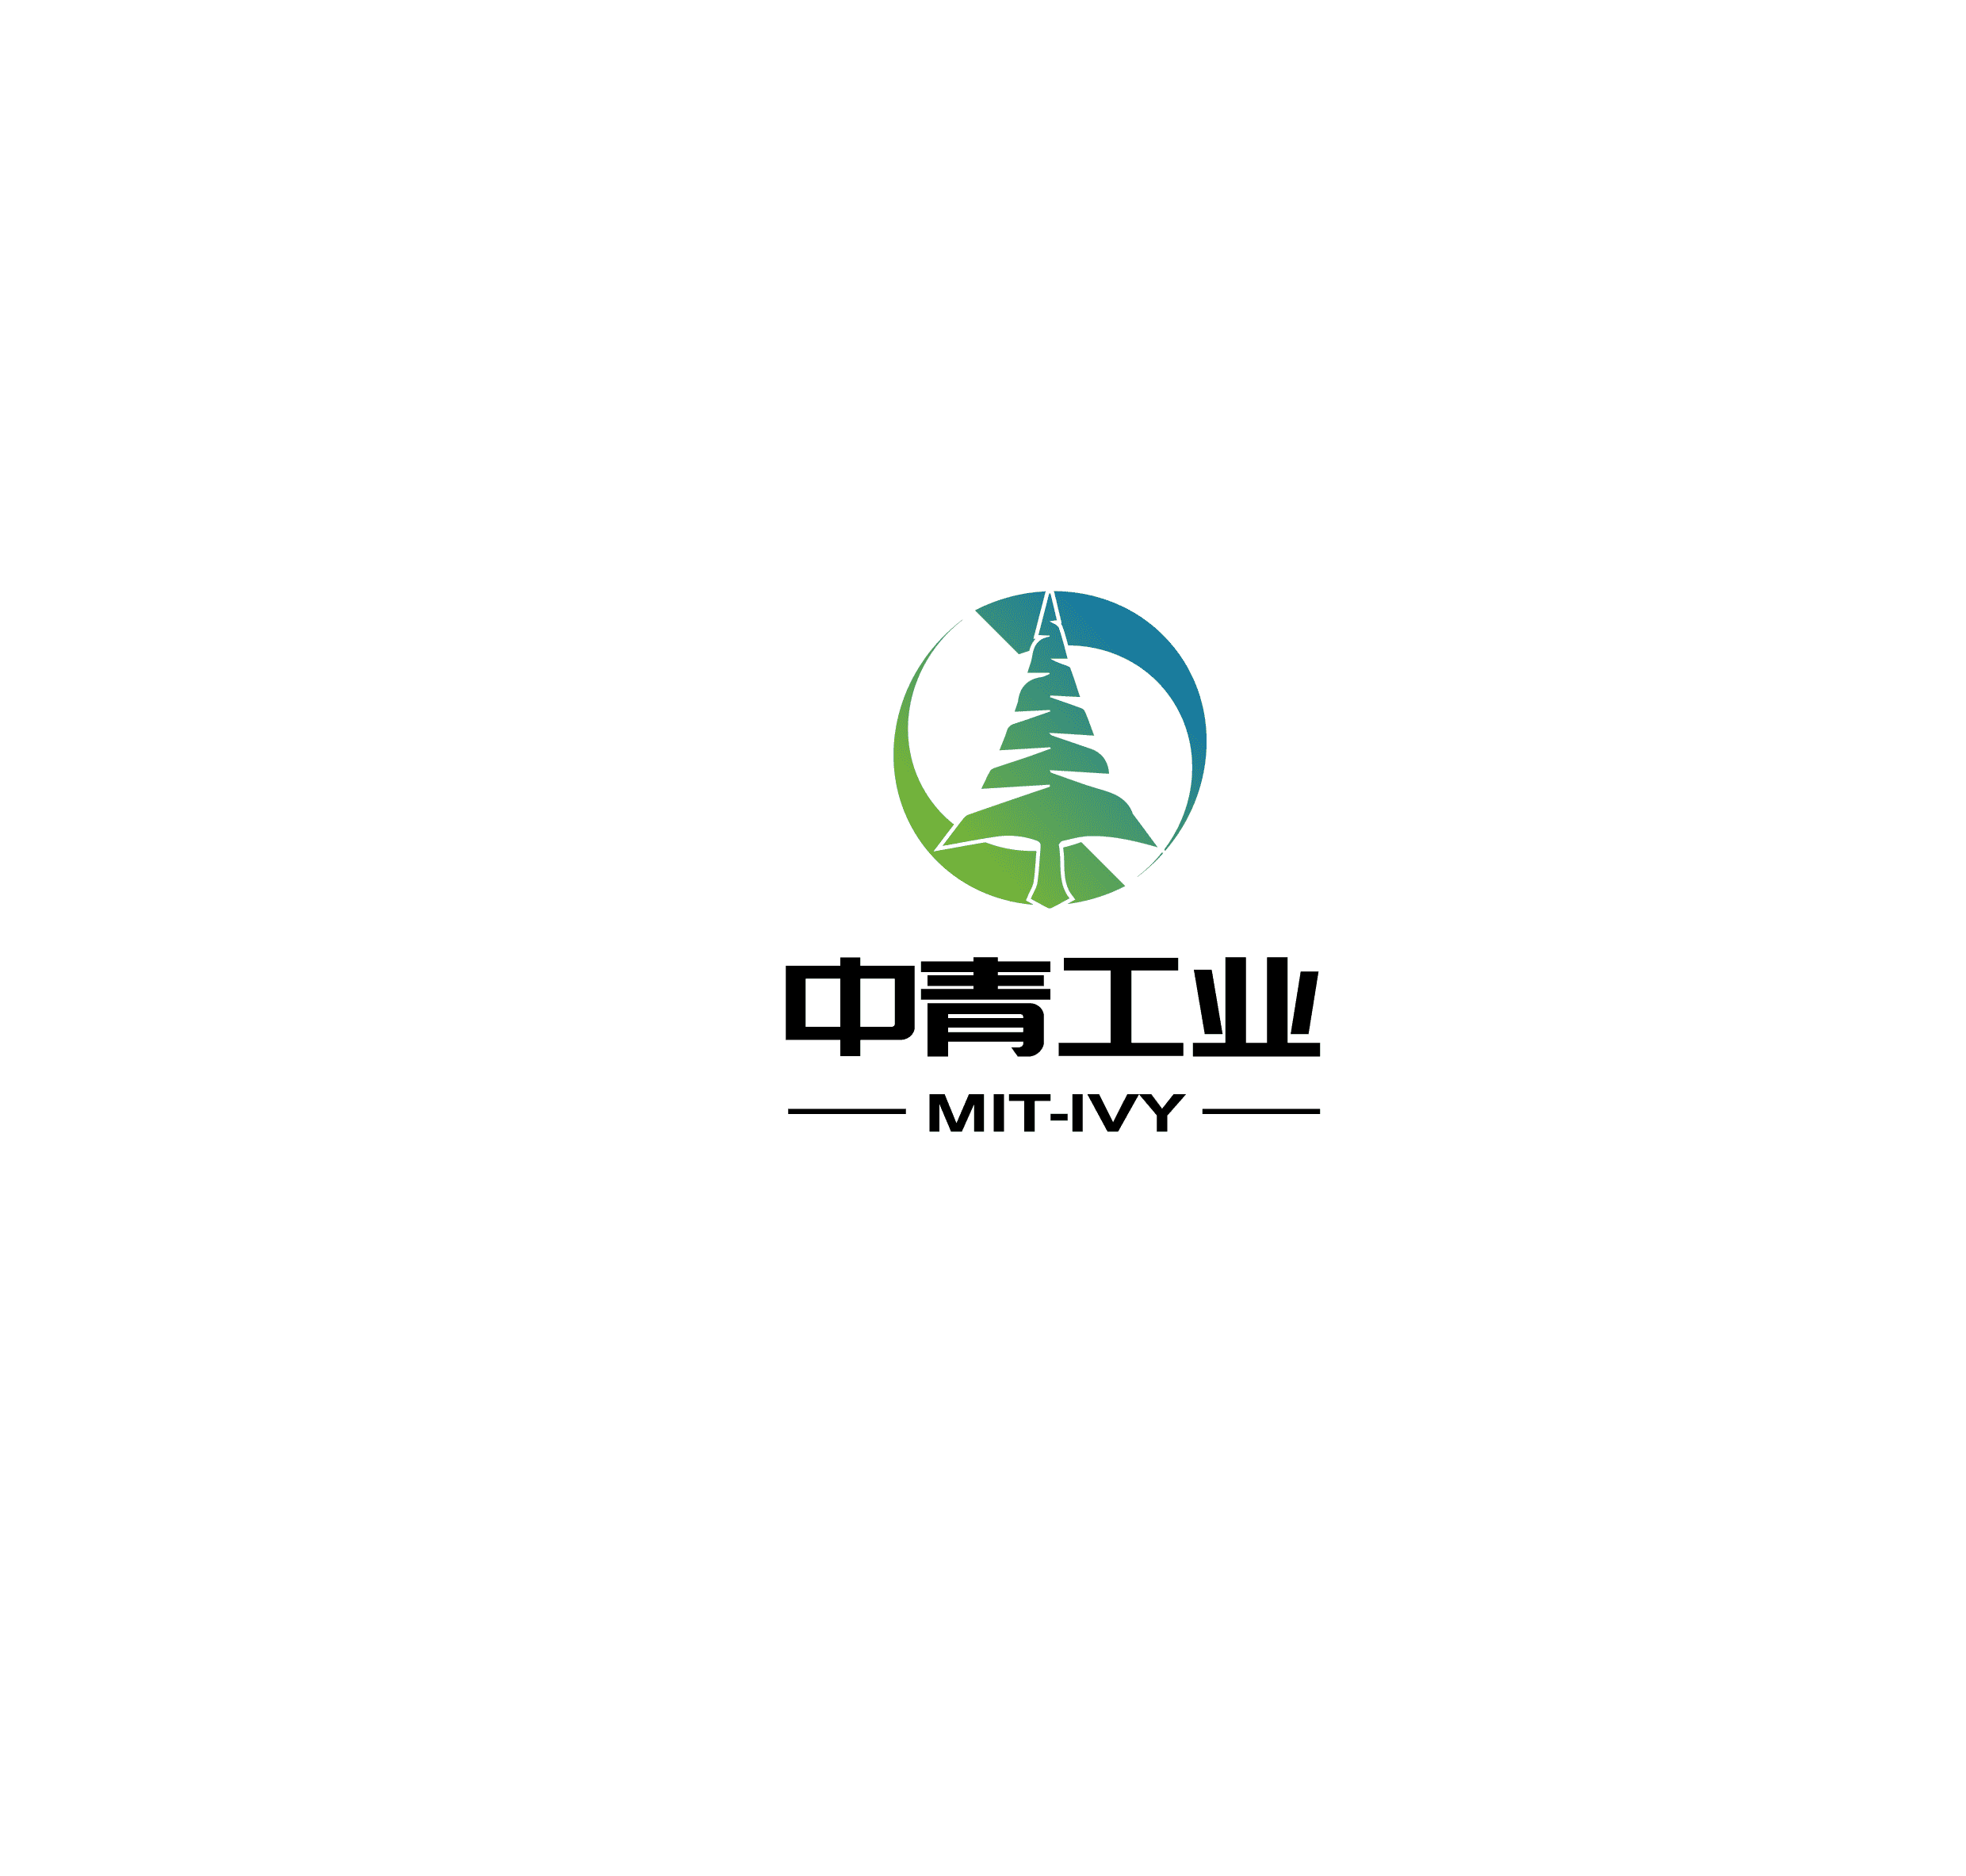 Sepuluh, pewarna perantara —Mit-ivy Industry co., ltd